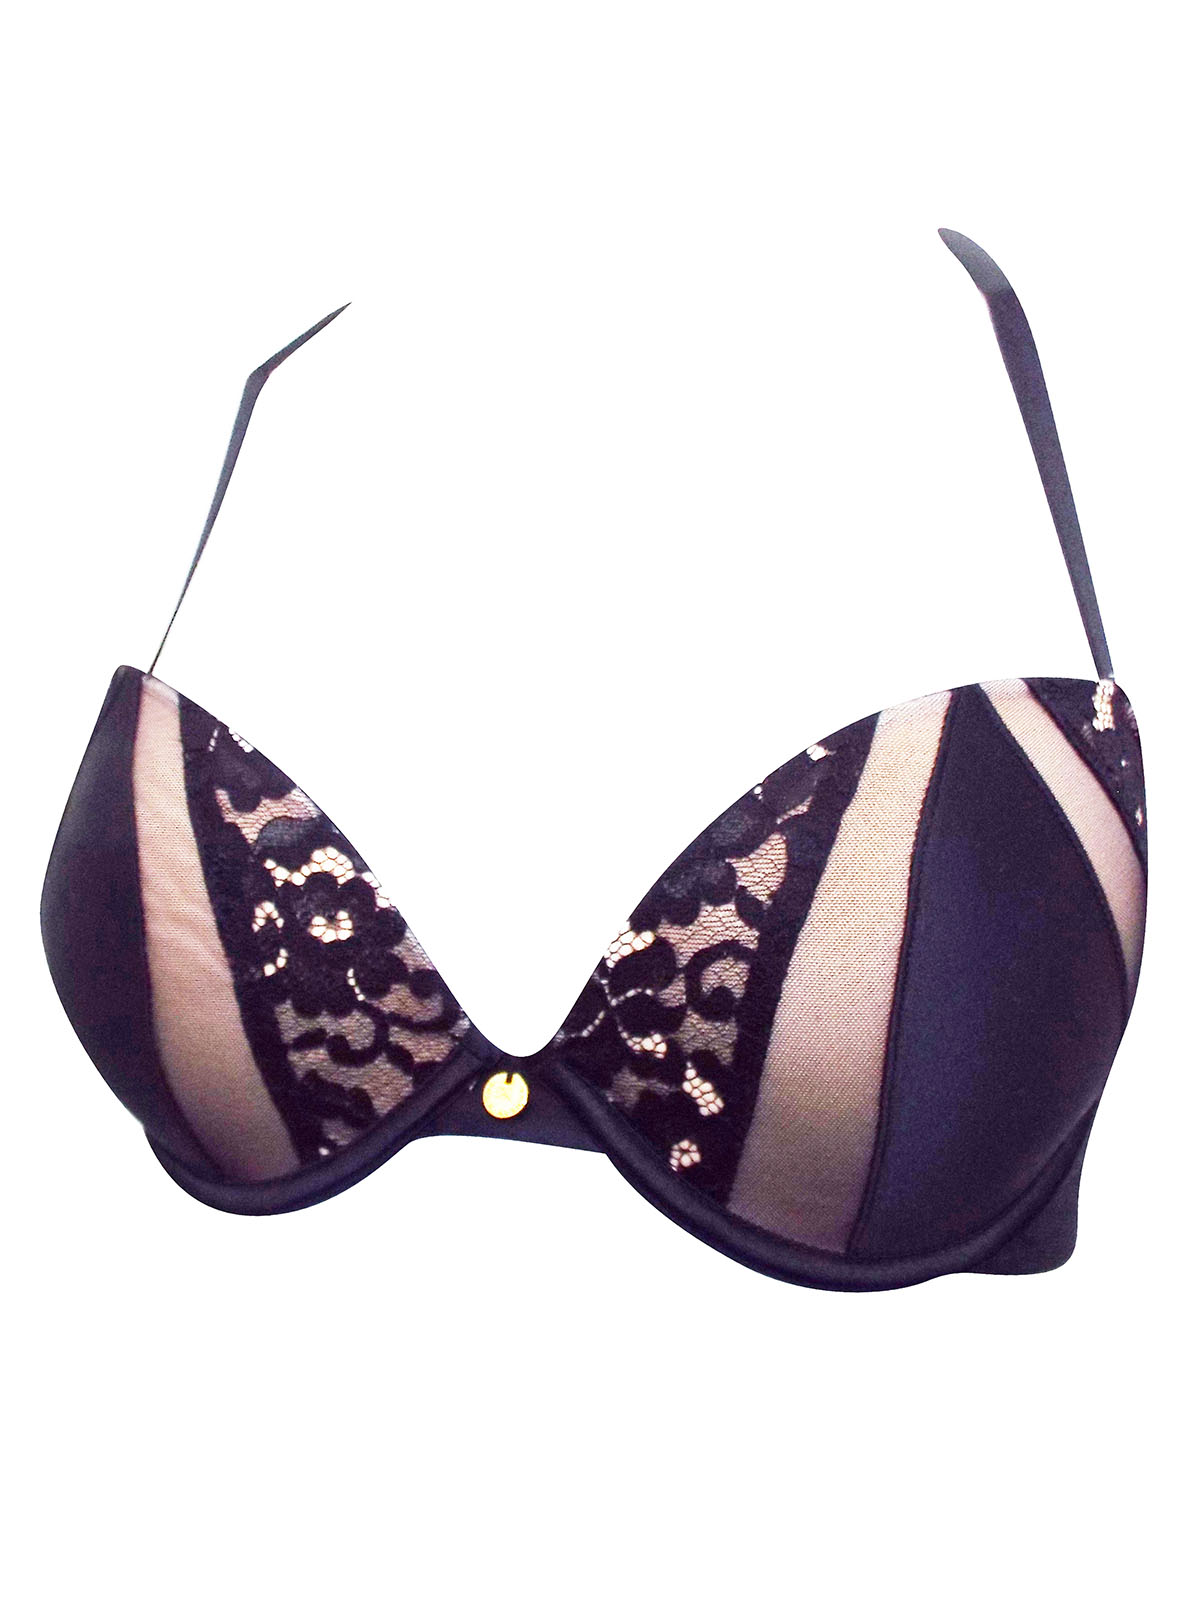 Boux Avenue Mackenna plunge bra - Black & Nude - 28C, £12.00